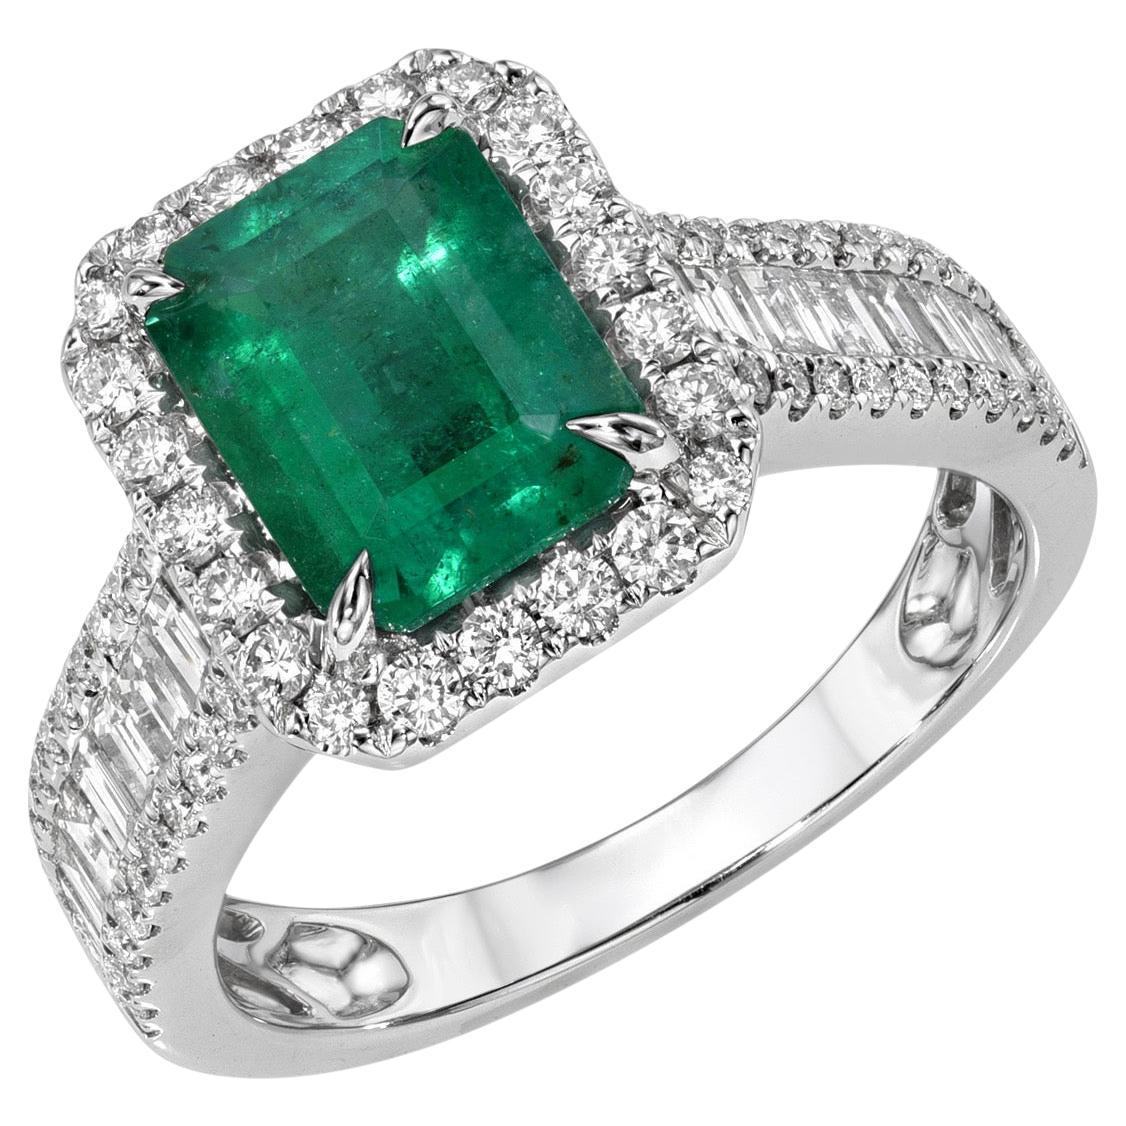 Emerald Ring 1.96 Carat Emerald Cut For Sale